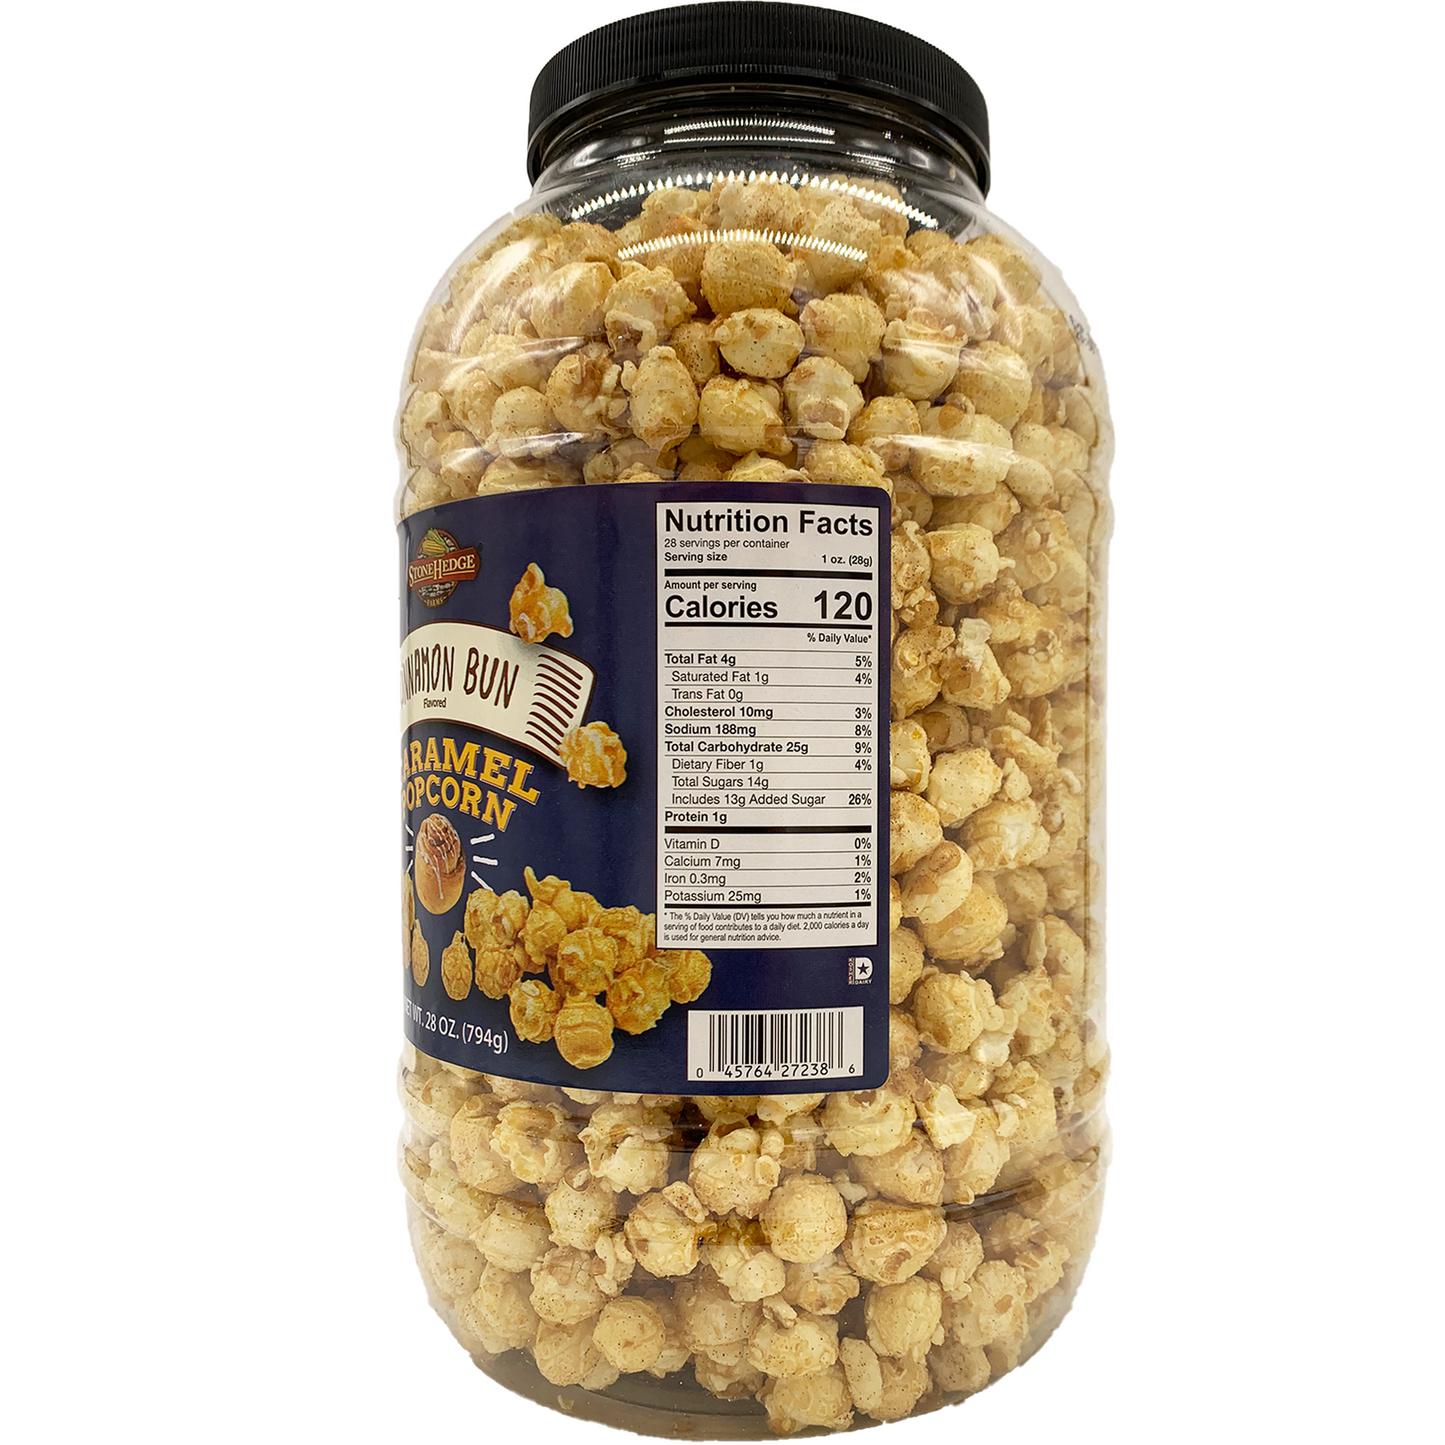 Stonehedge Farms Gourmet Popcorn Barrel Variety Pack - 32 Ounces Each - Two Pack (Cinnamon Bun + Caramel)